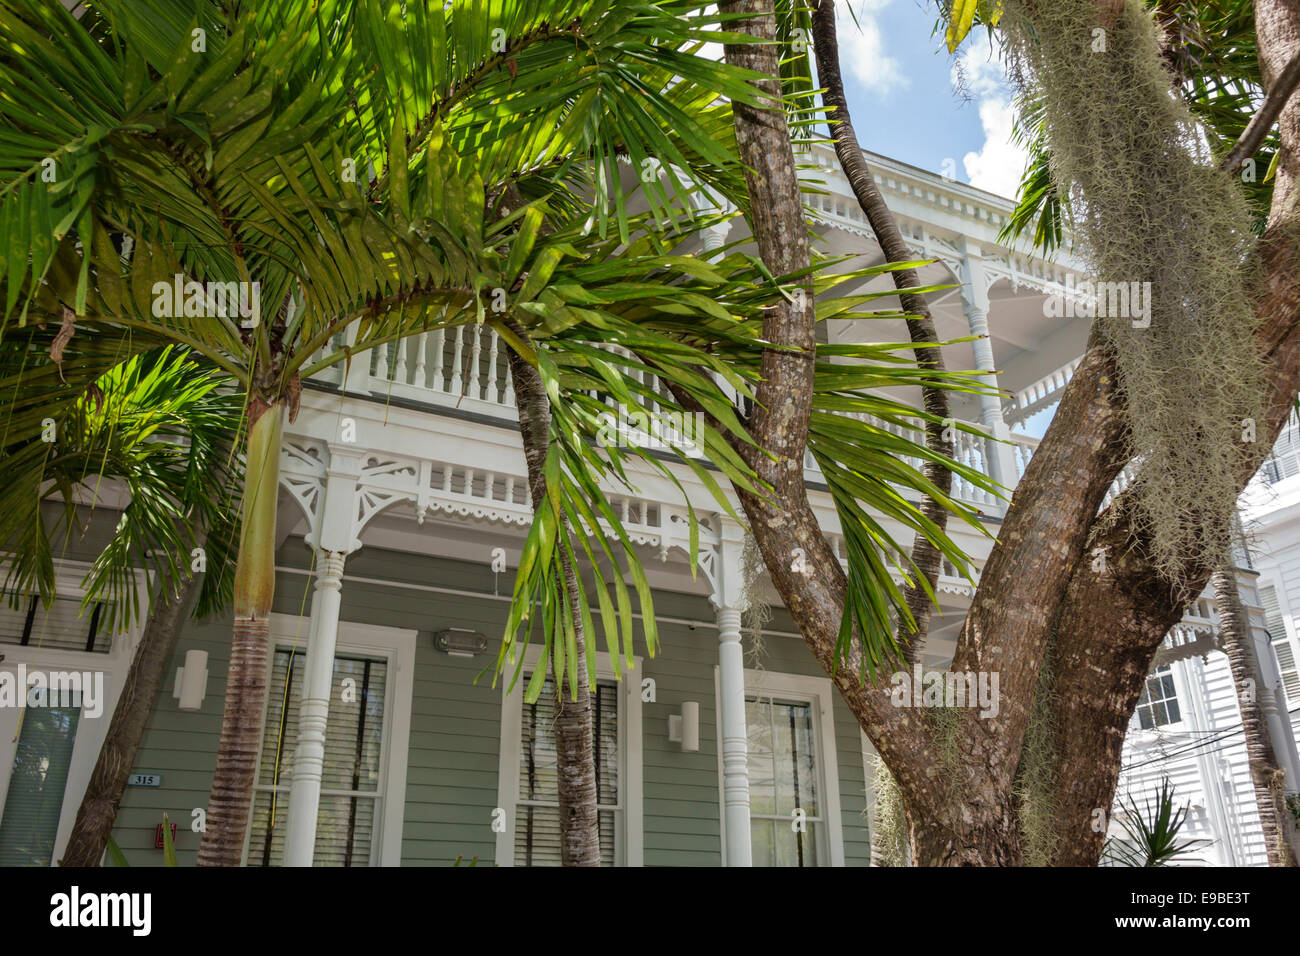 Key West Florida, Keys Fleming Street, Haushäuser Häuser Häuser Häuser Wohnsitz, Haus, private Residenz, Palmen, spanisches Moos, tropische Landschaft Stockfoto